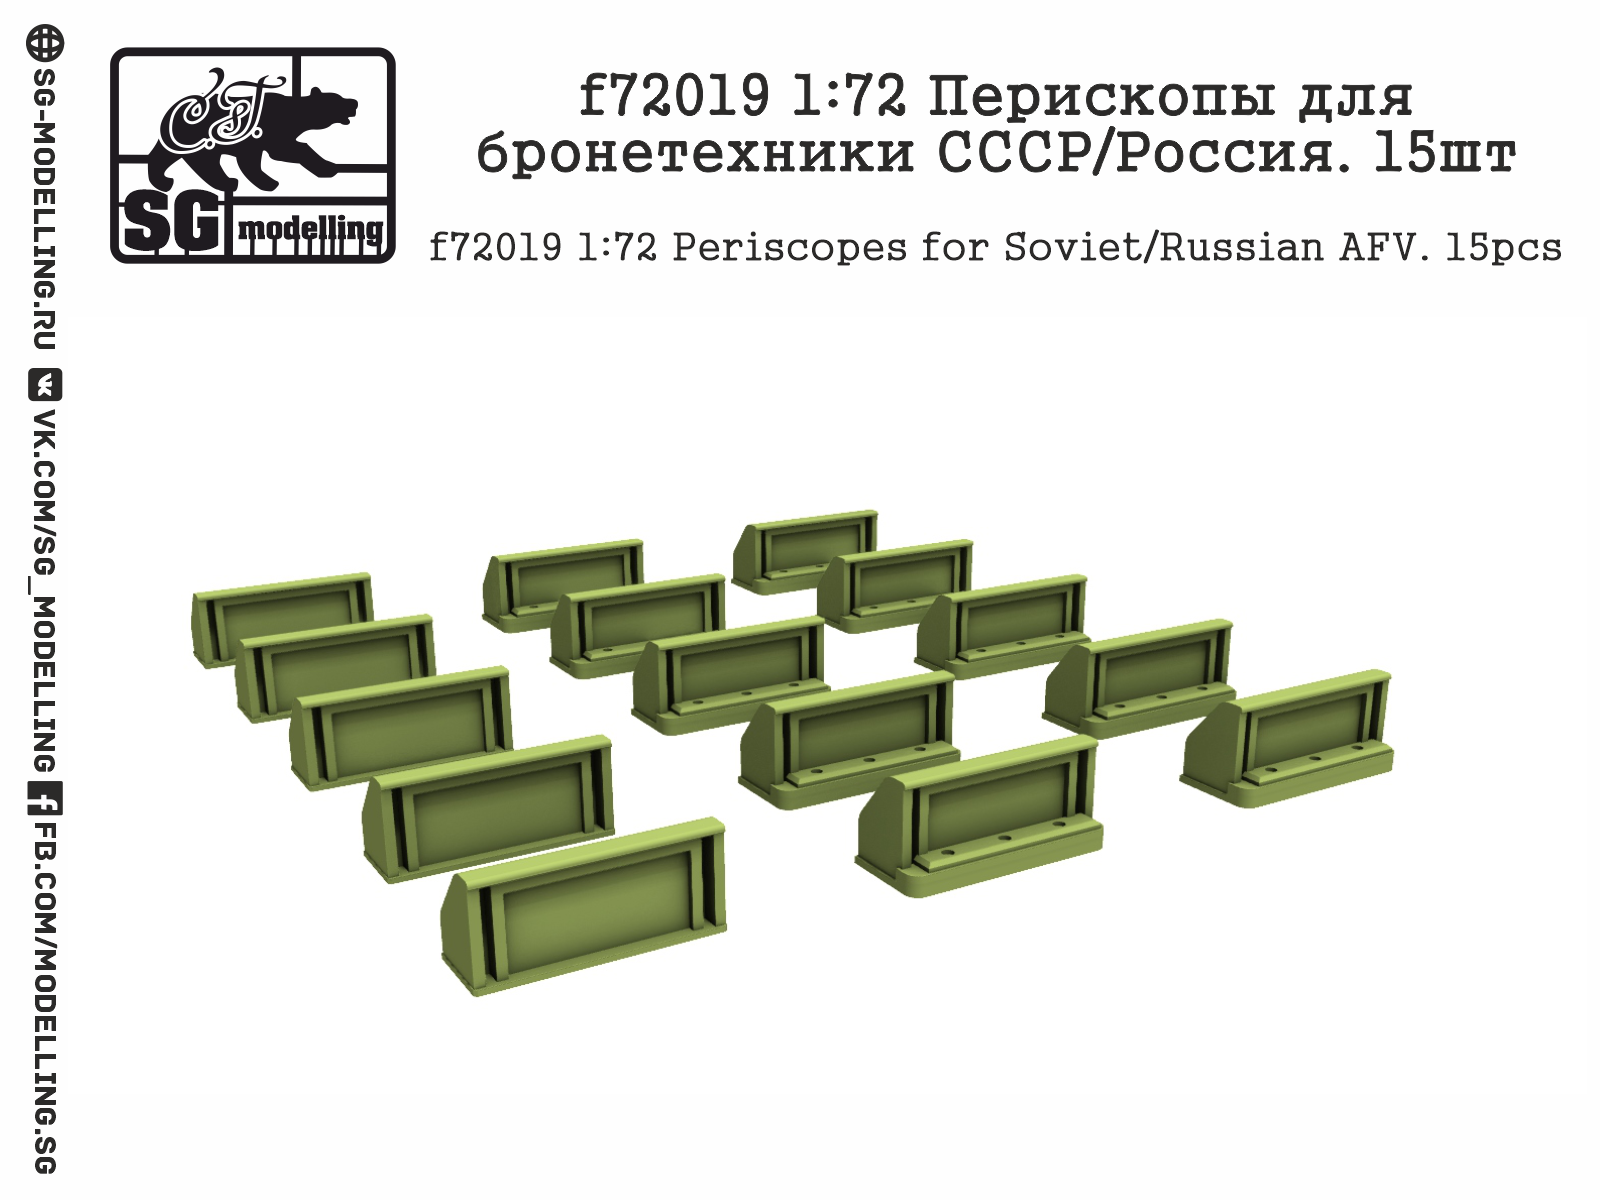 Soviet / Russian AFV periscopes (15pc)